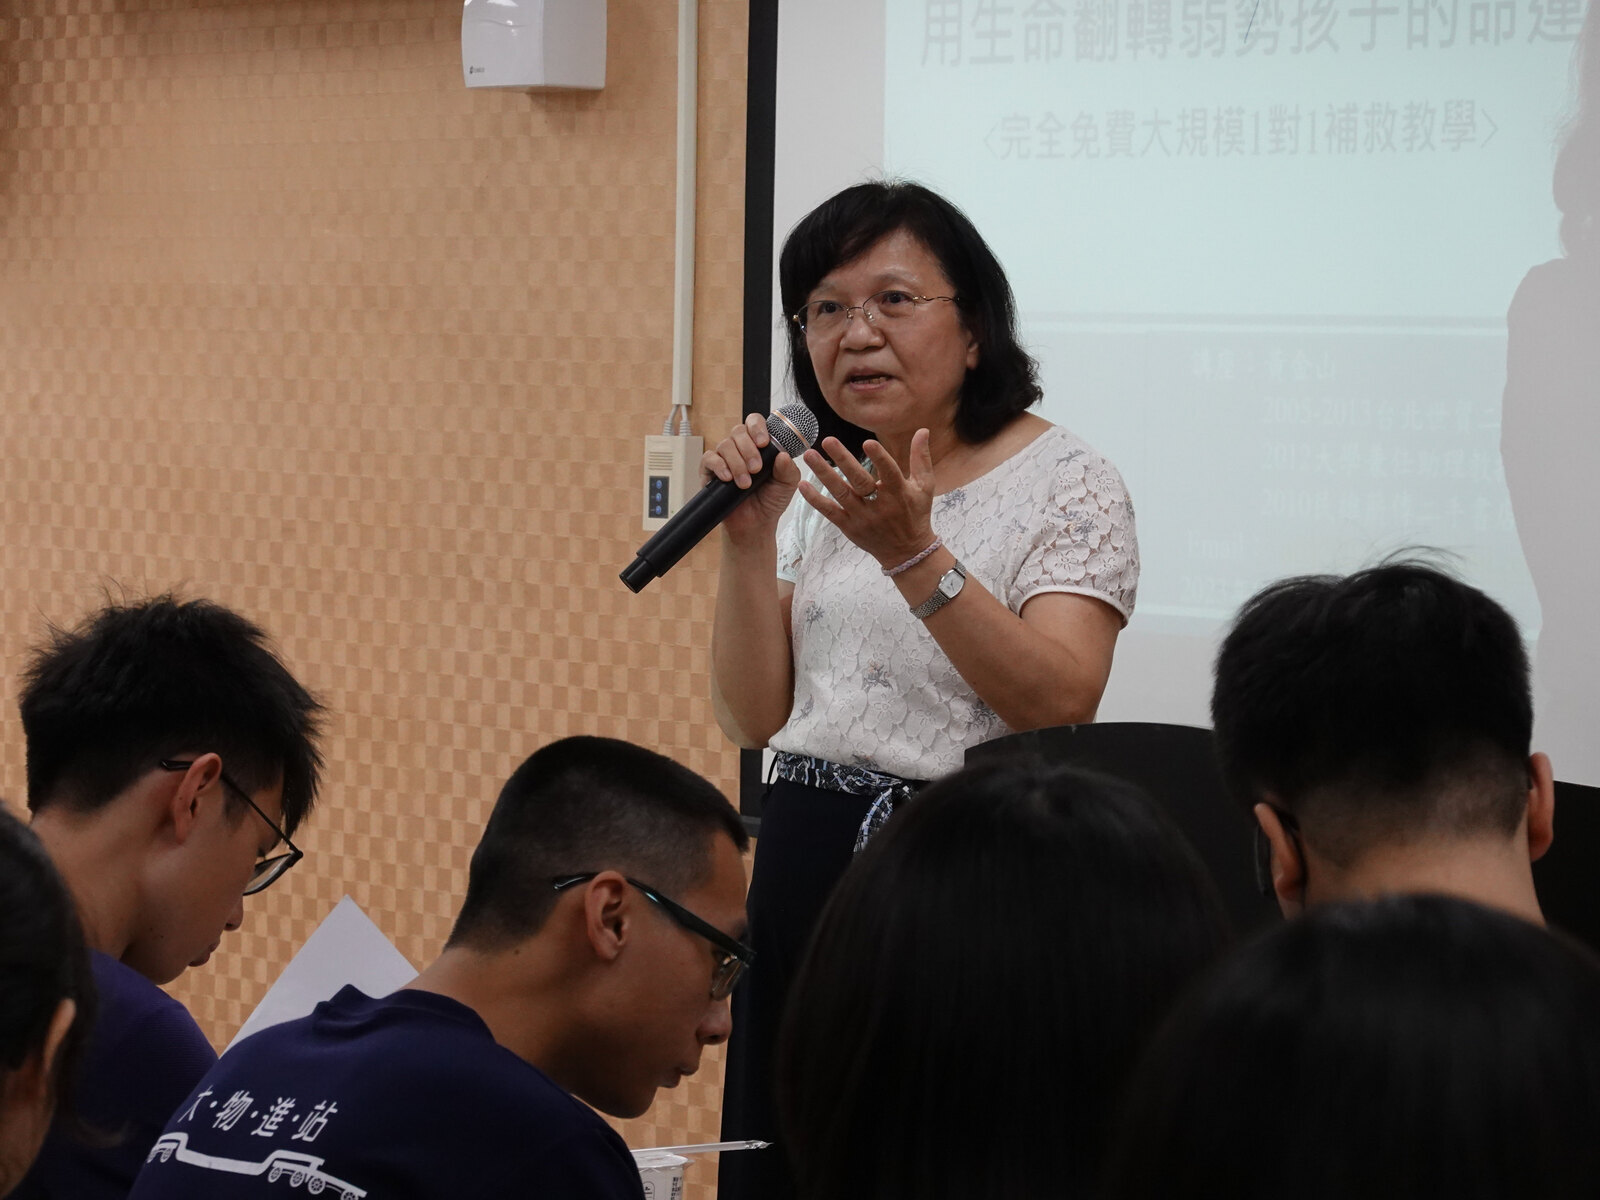 NSYSU Senior Vice President Shiow-Fon Tsay encouraged students of the tutoring program